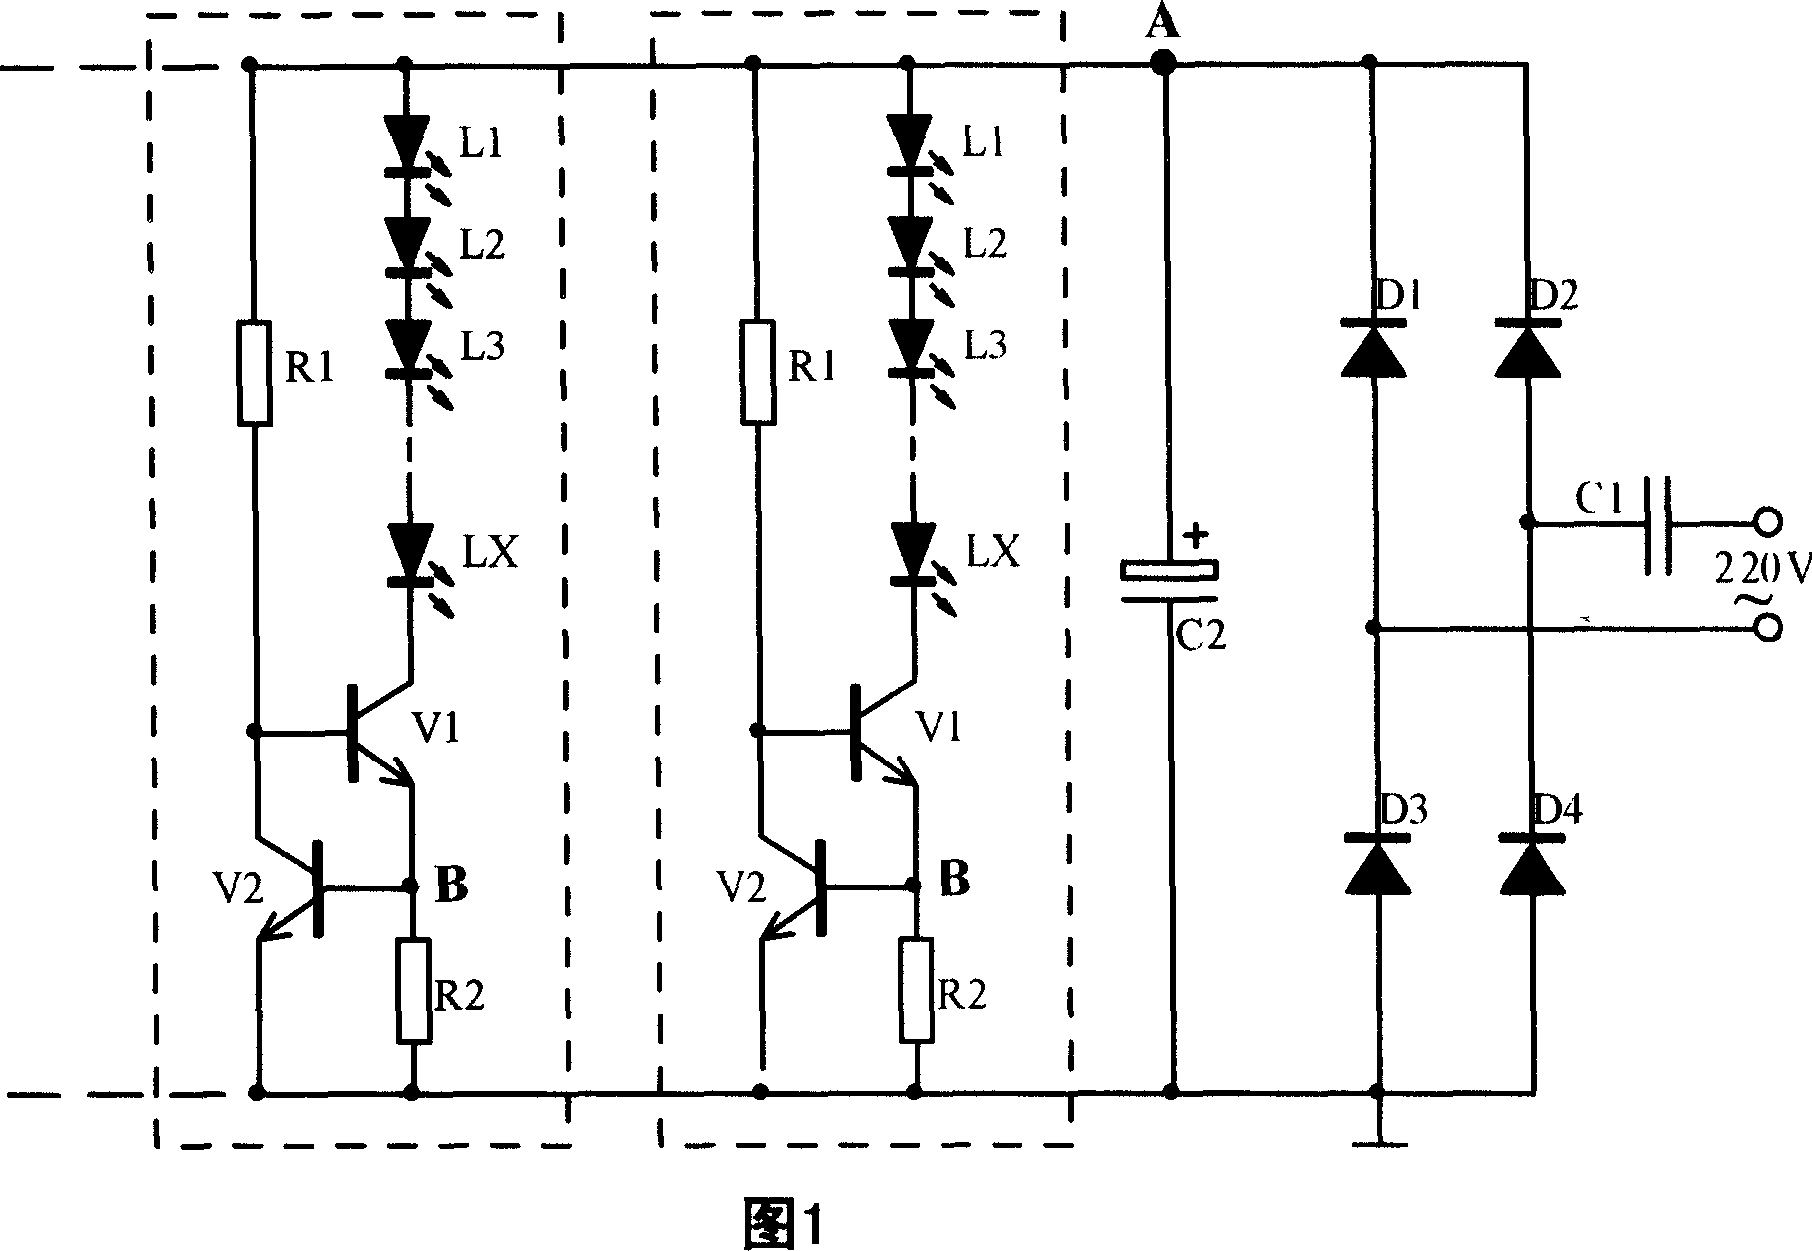 LED illuminating light and its controlling circuit